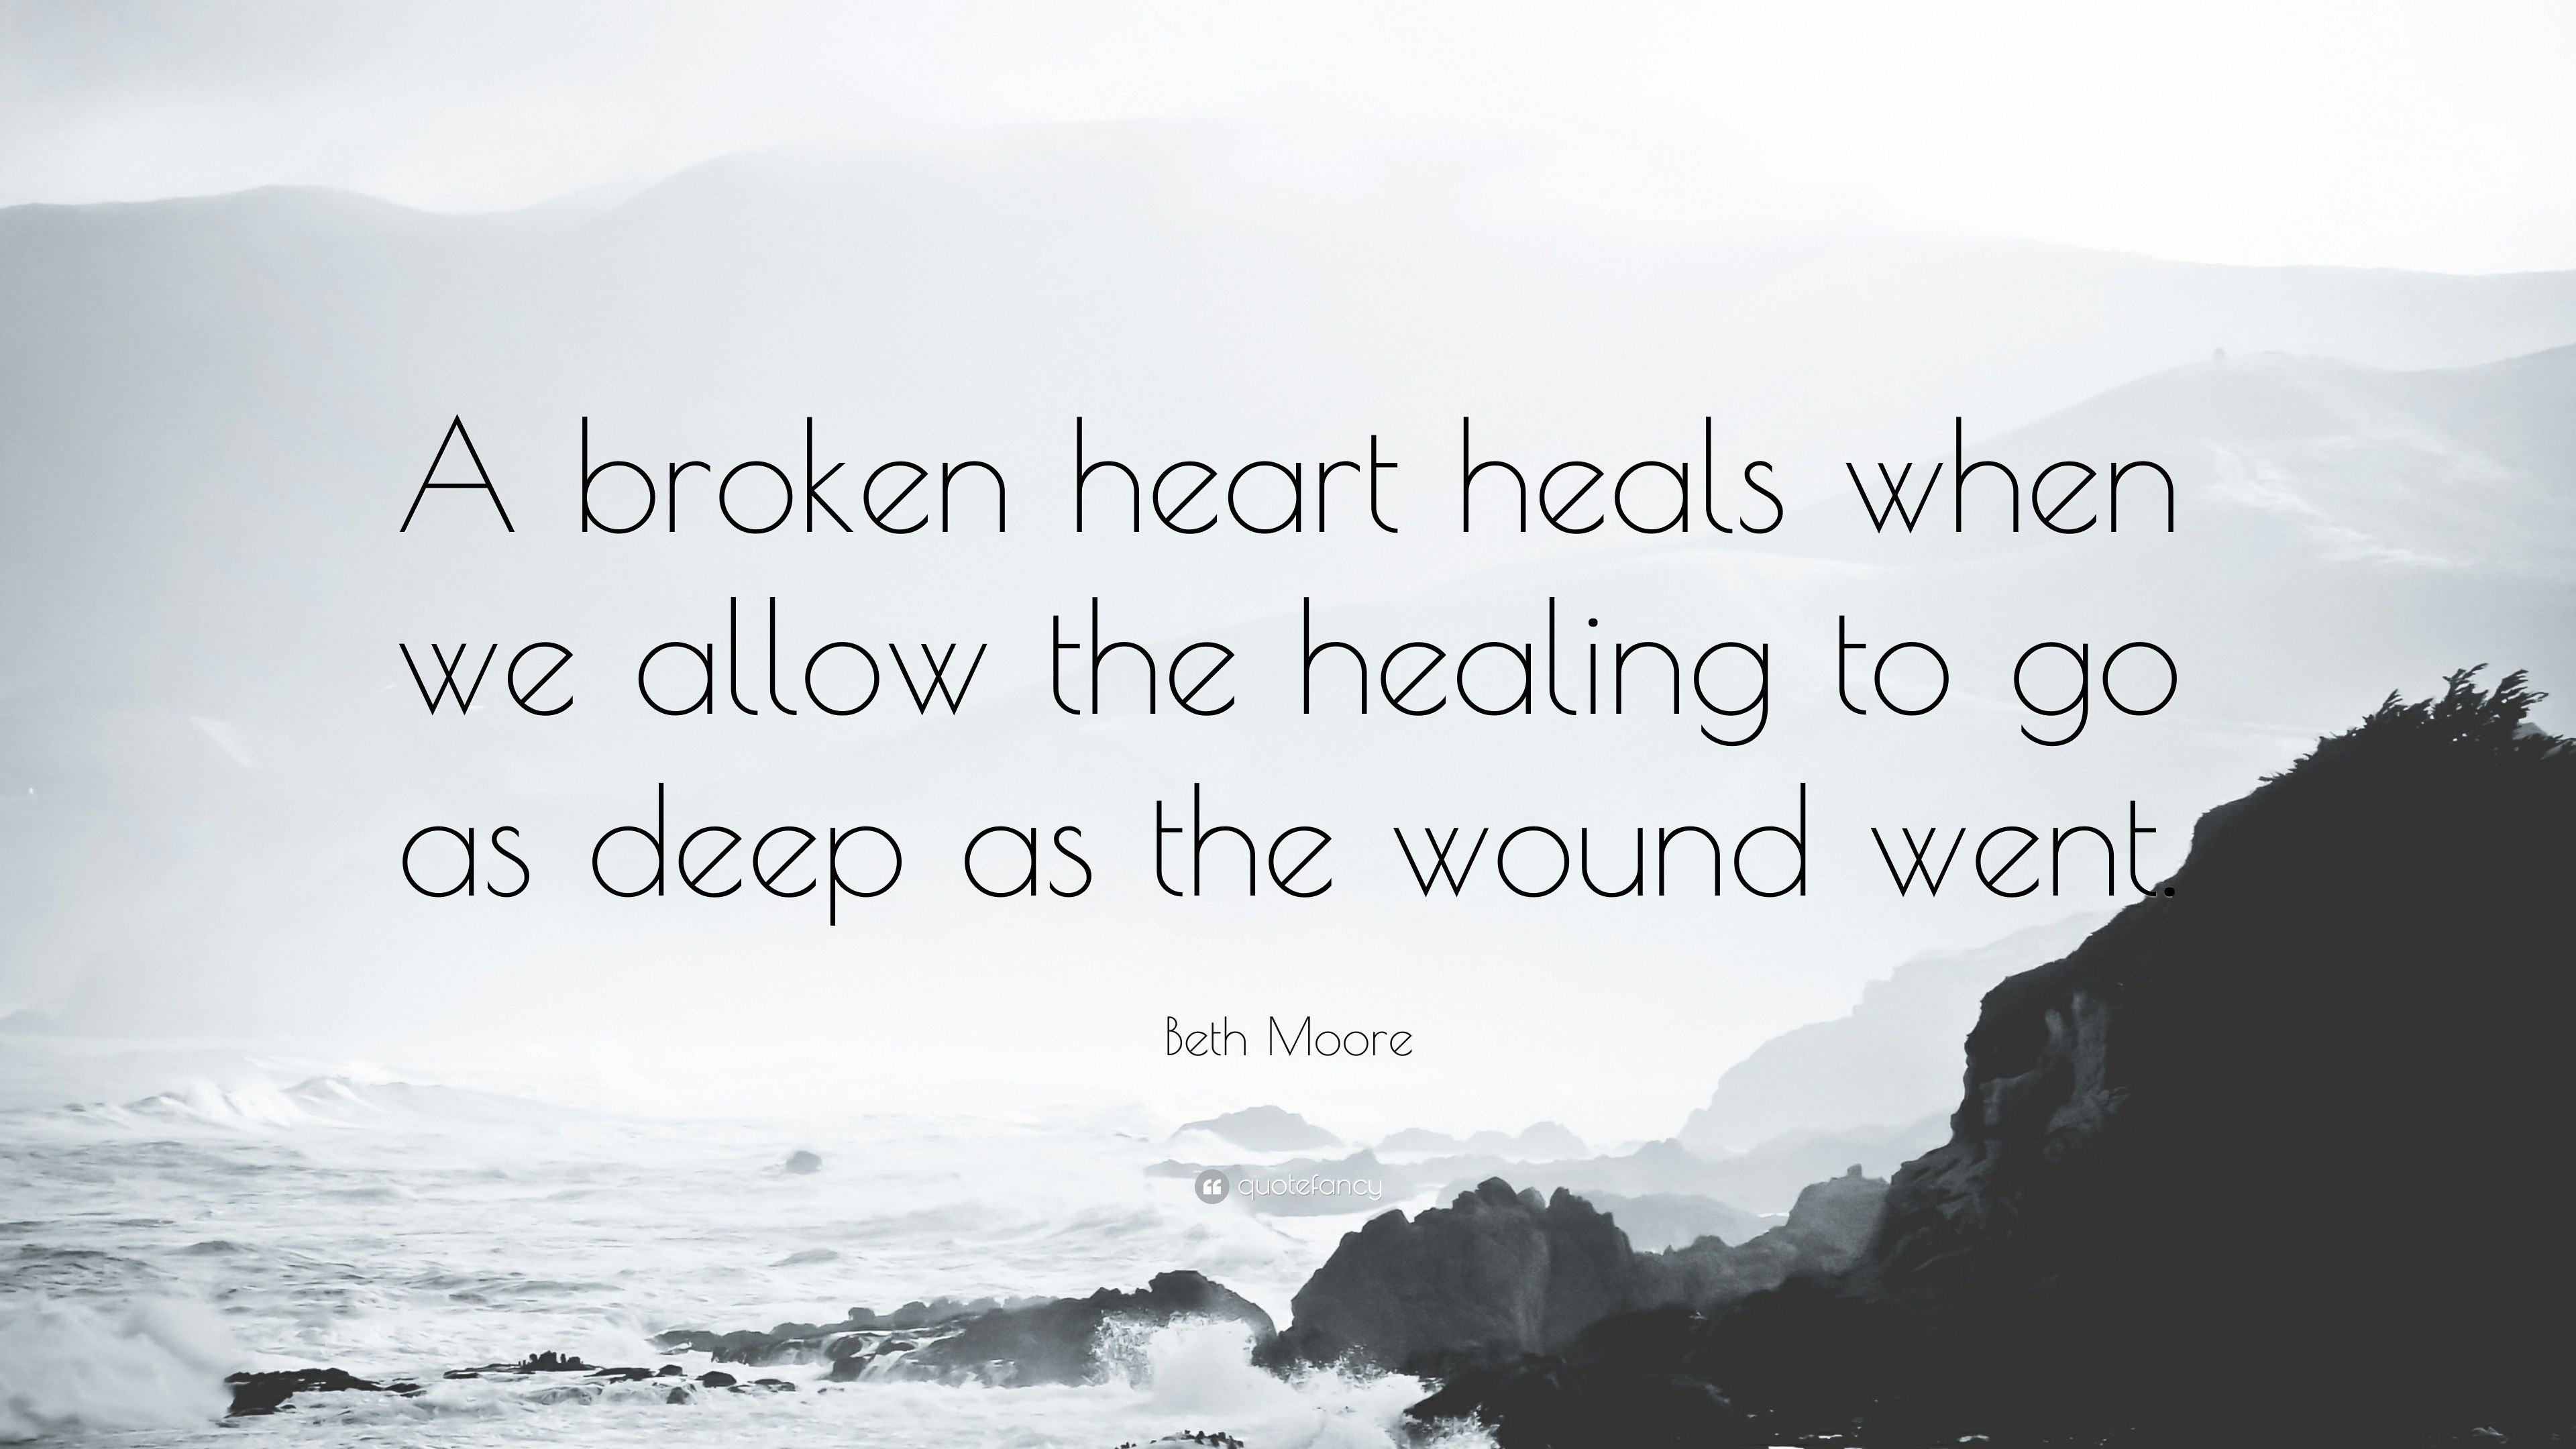 Beth Moore Quote “A broken heart heals when we allow the